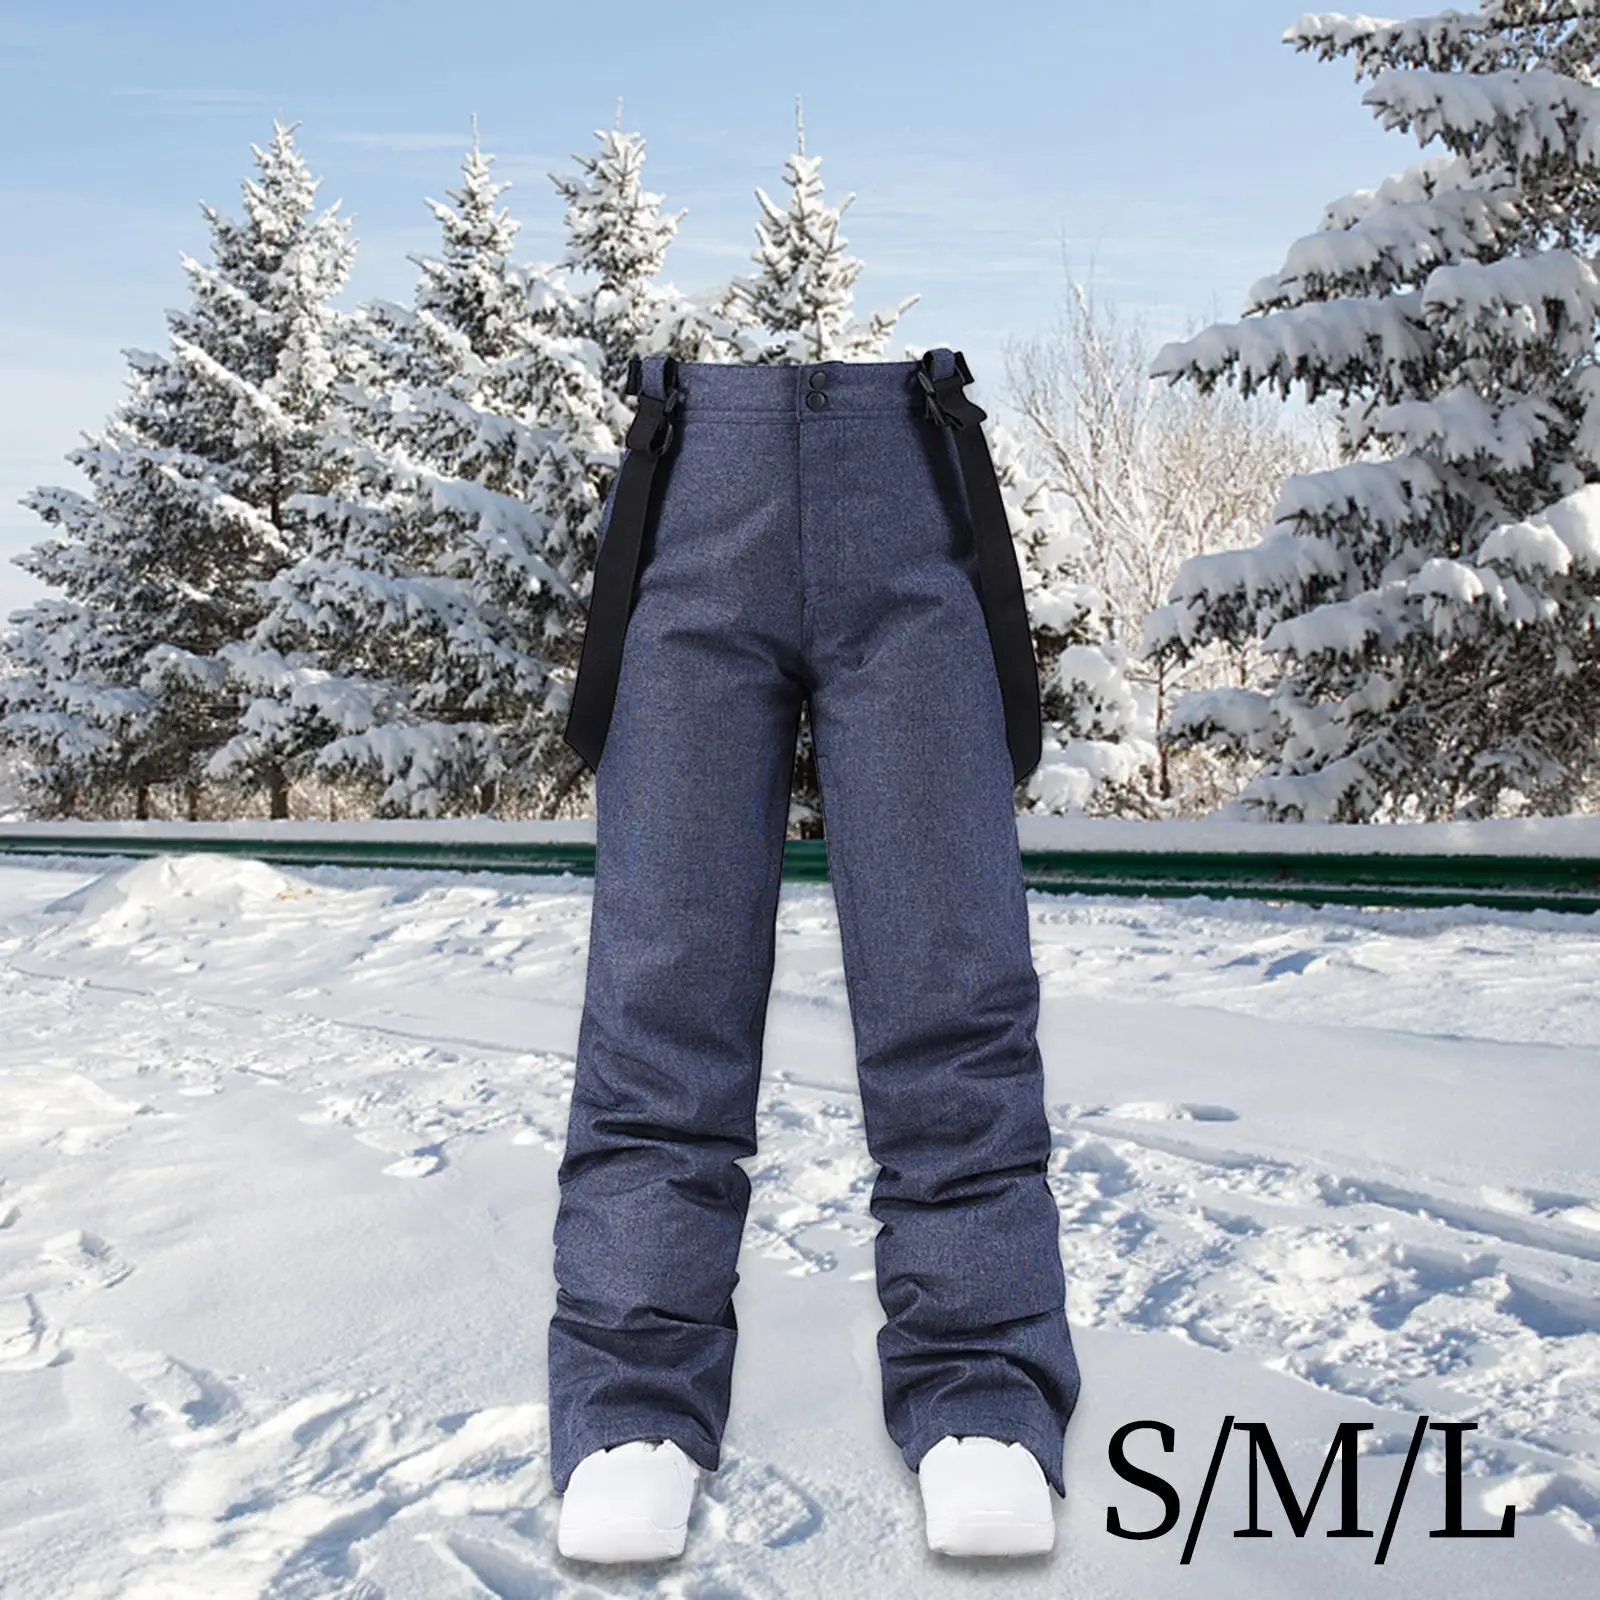 Ski Pants Insulated Warm Windproof Breathable Thick Winter Ski Bib Overalls